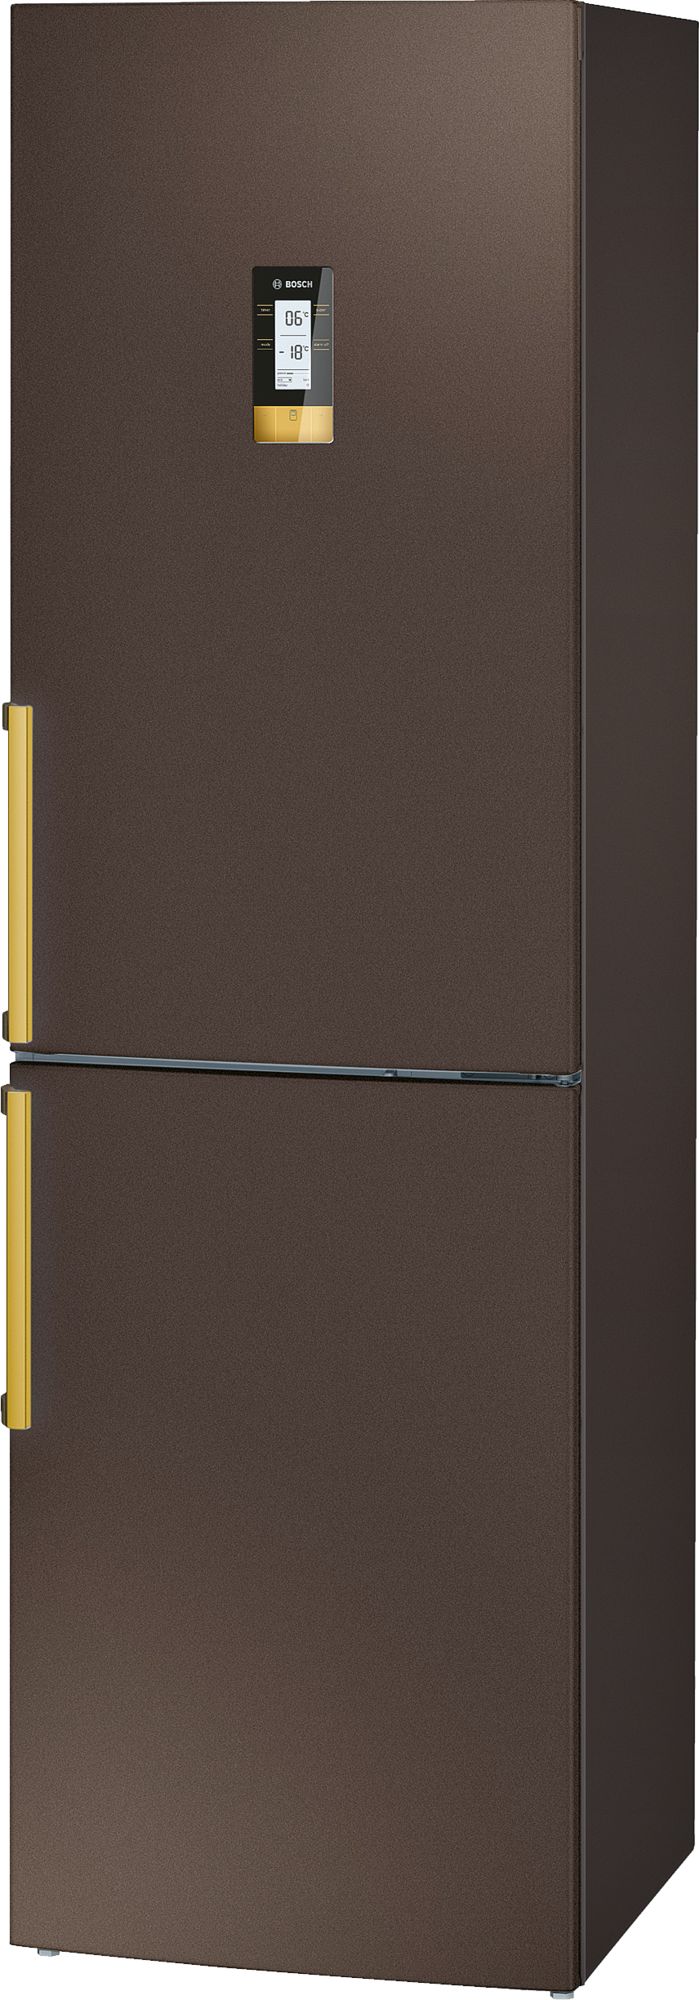 Холодильник Bosch kgn39xd18r коричневый